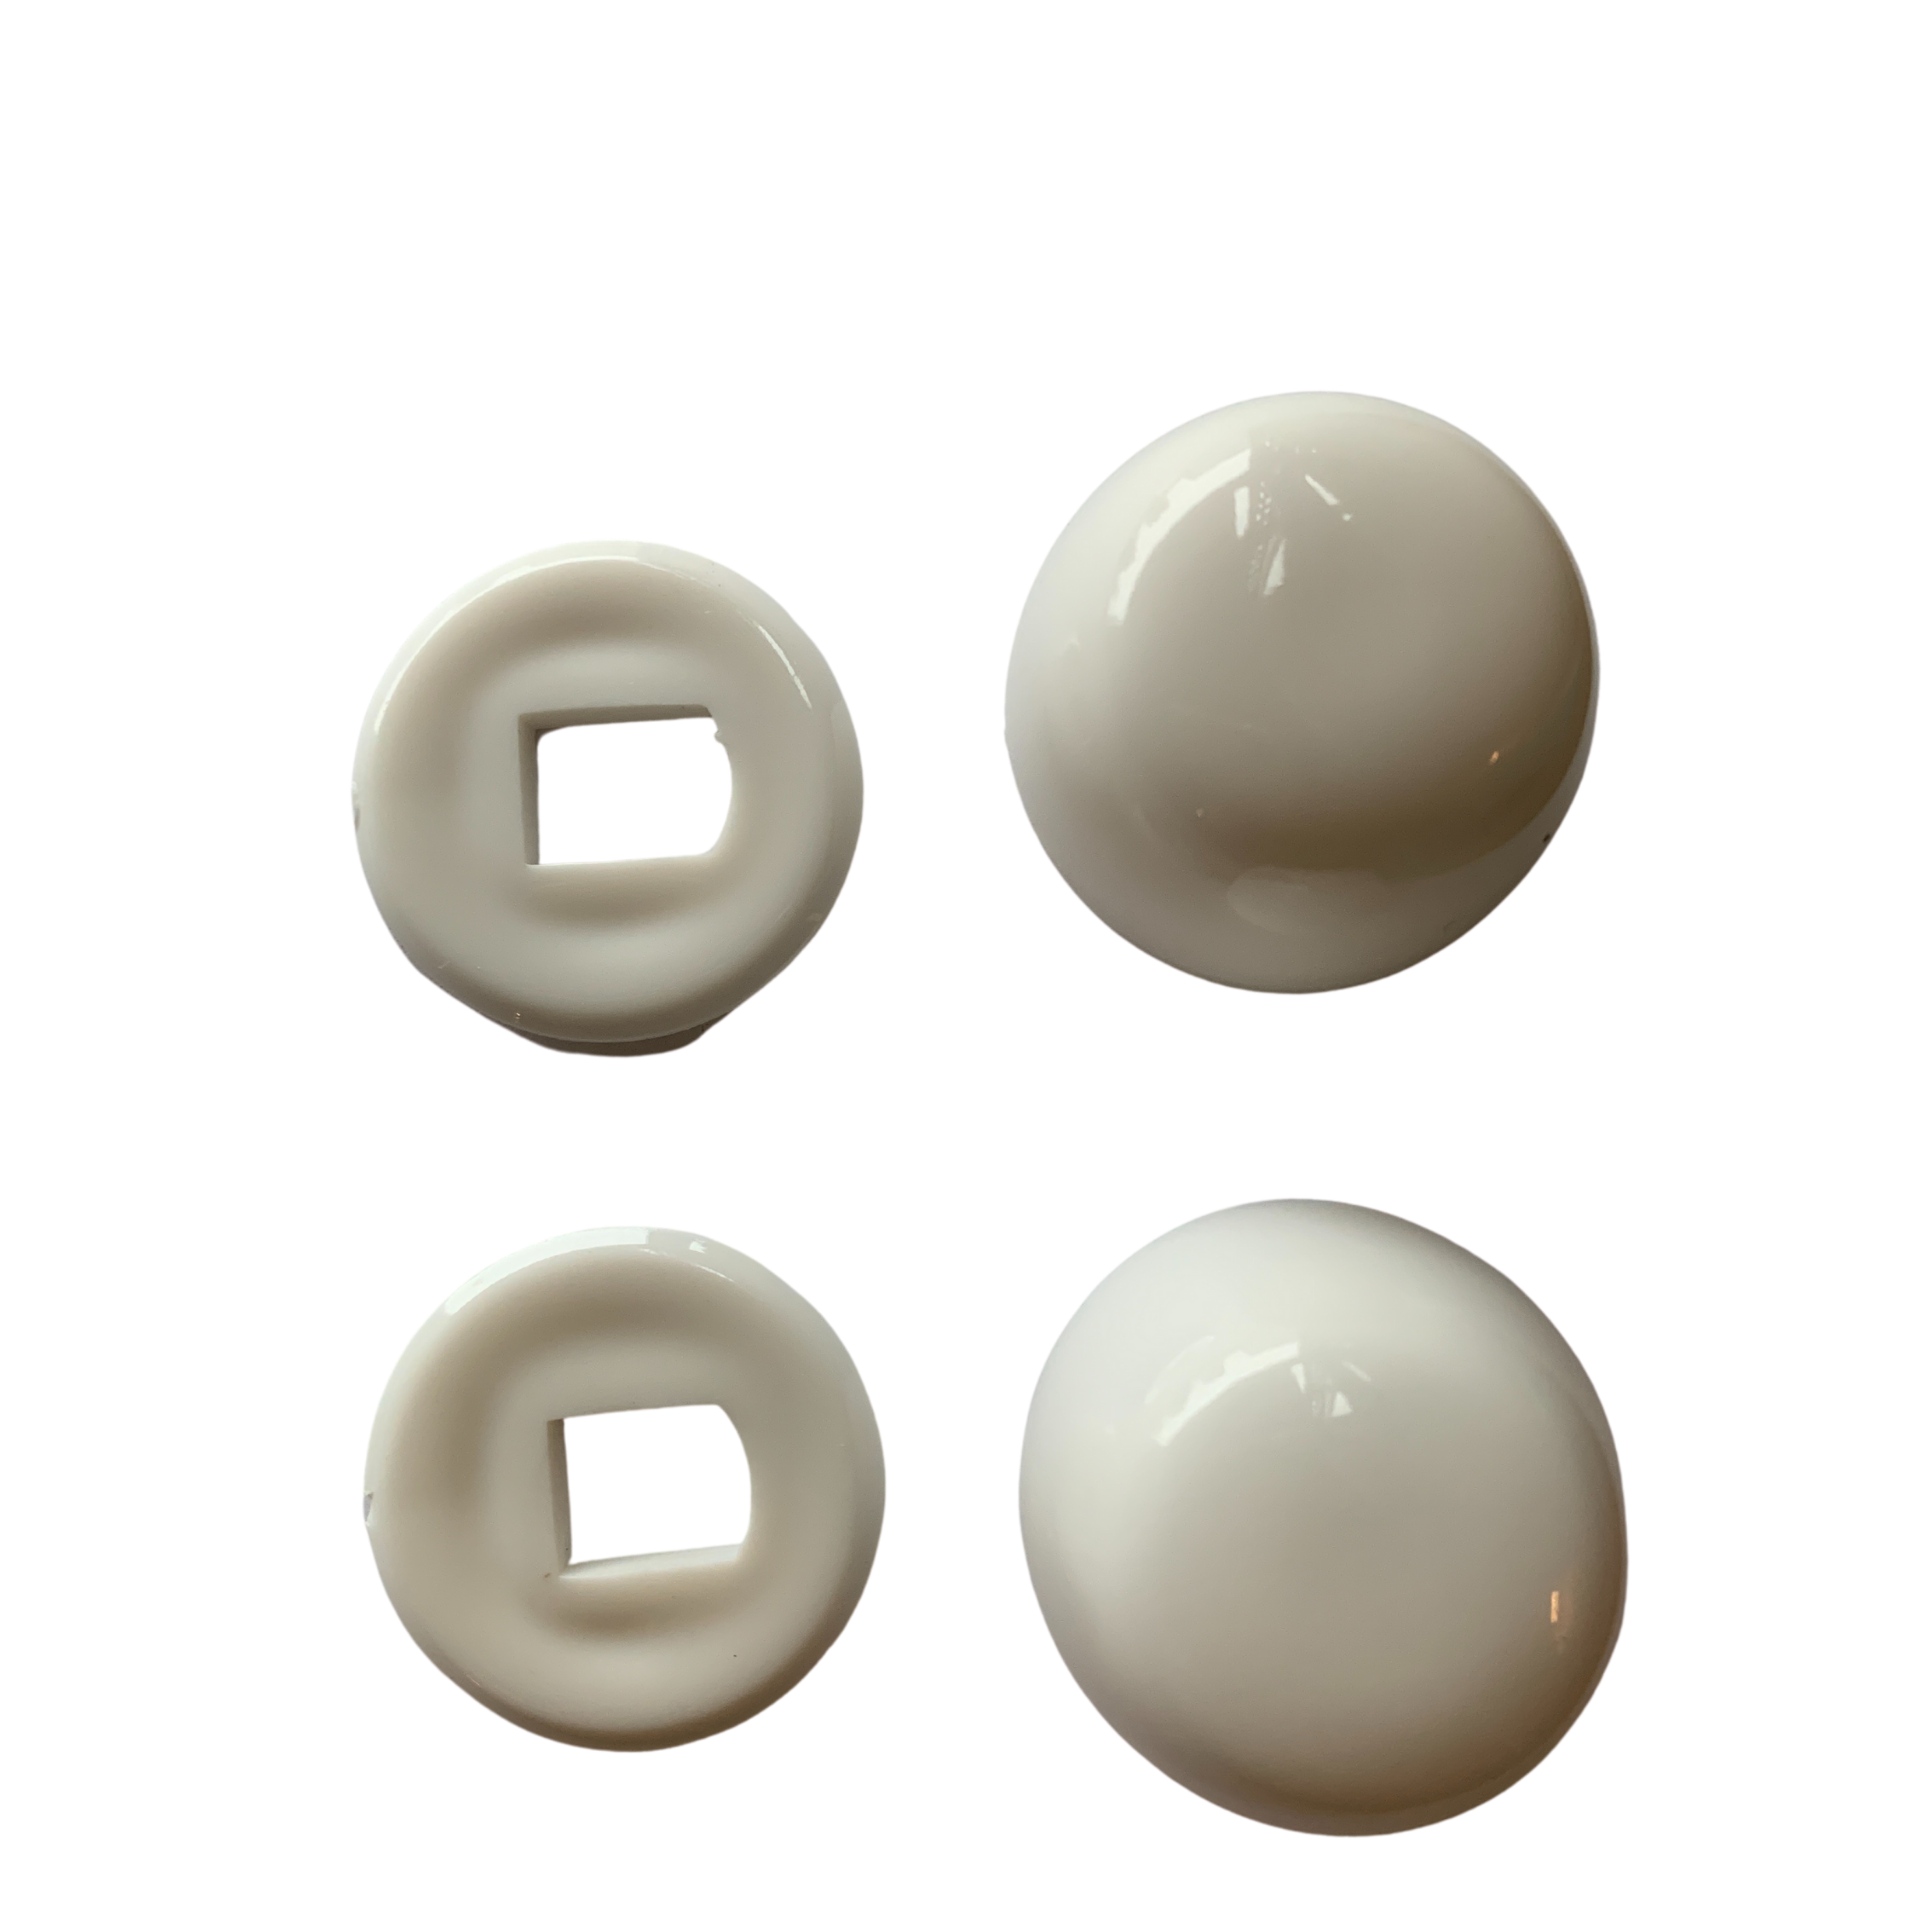 687243W White Bolt Caps for Non-Skirted Bowls